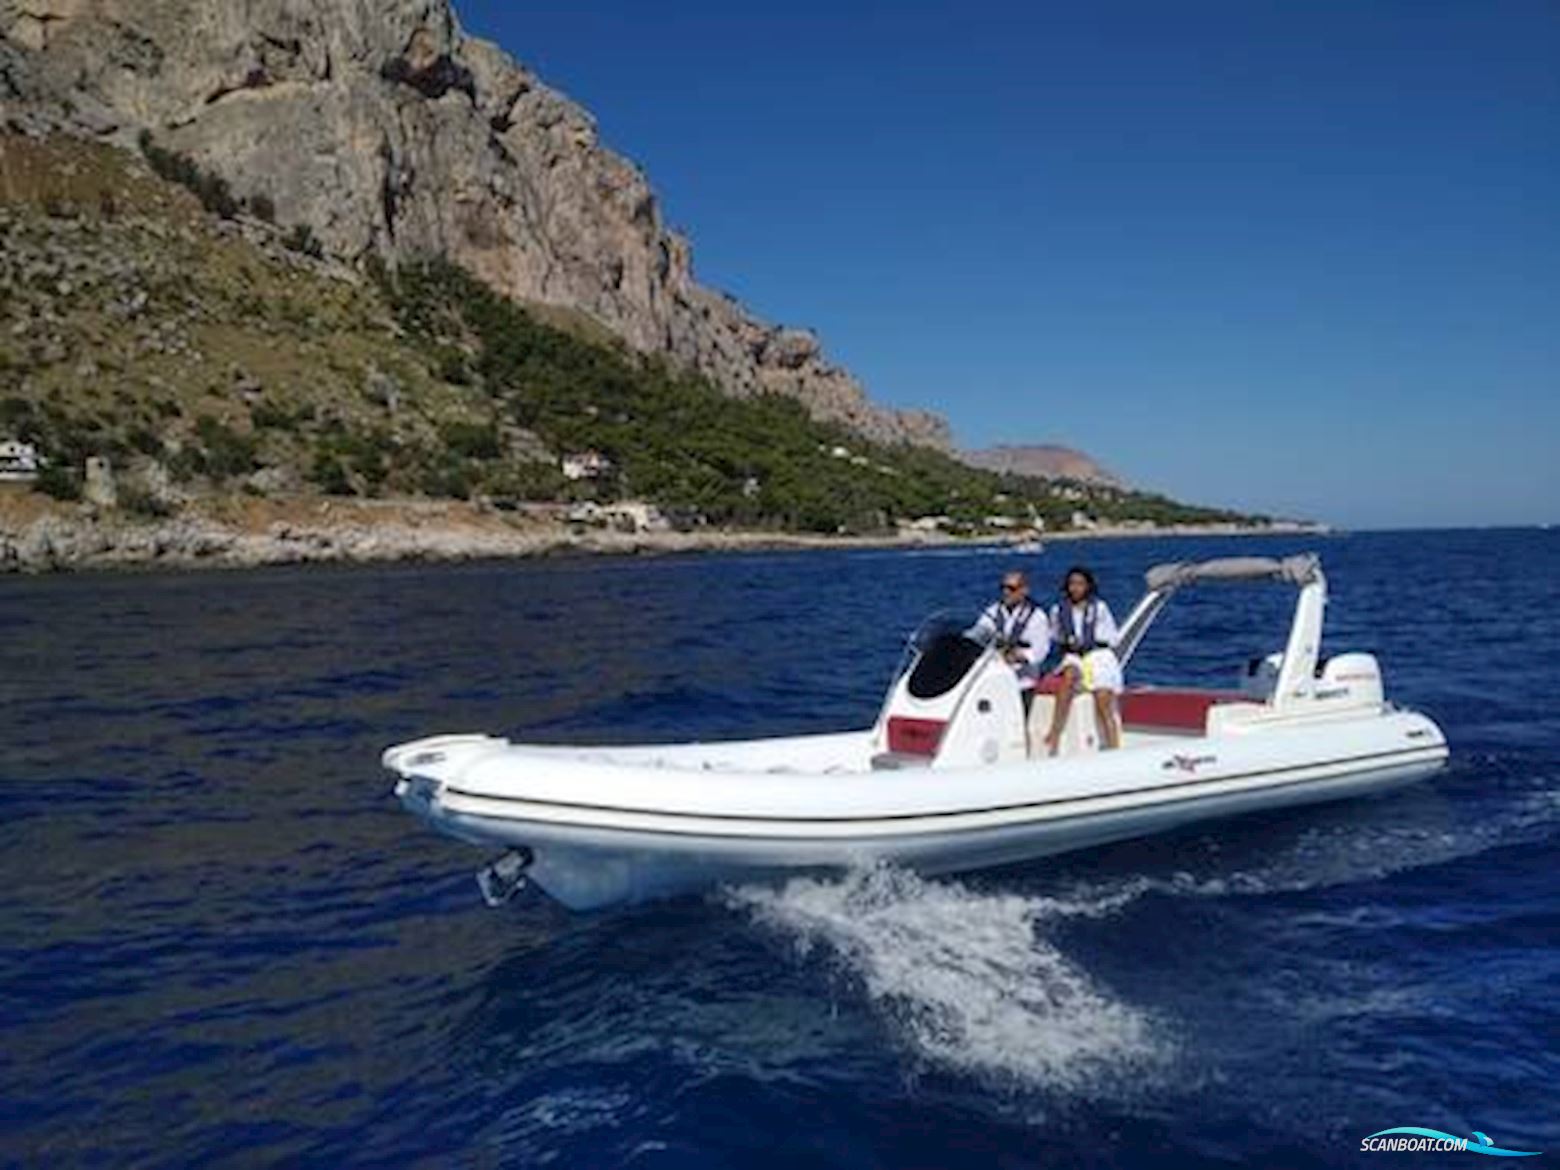 Alta Marea Yacht Wave 27 Motor boat 2022, with Suzuki DF200Altx engine, No country info